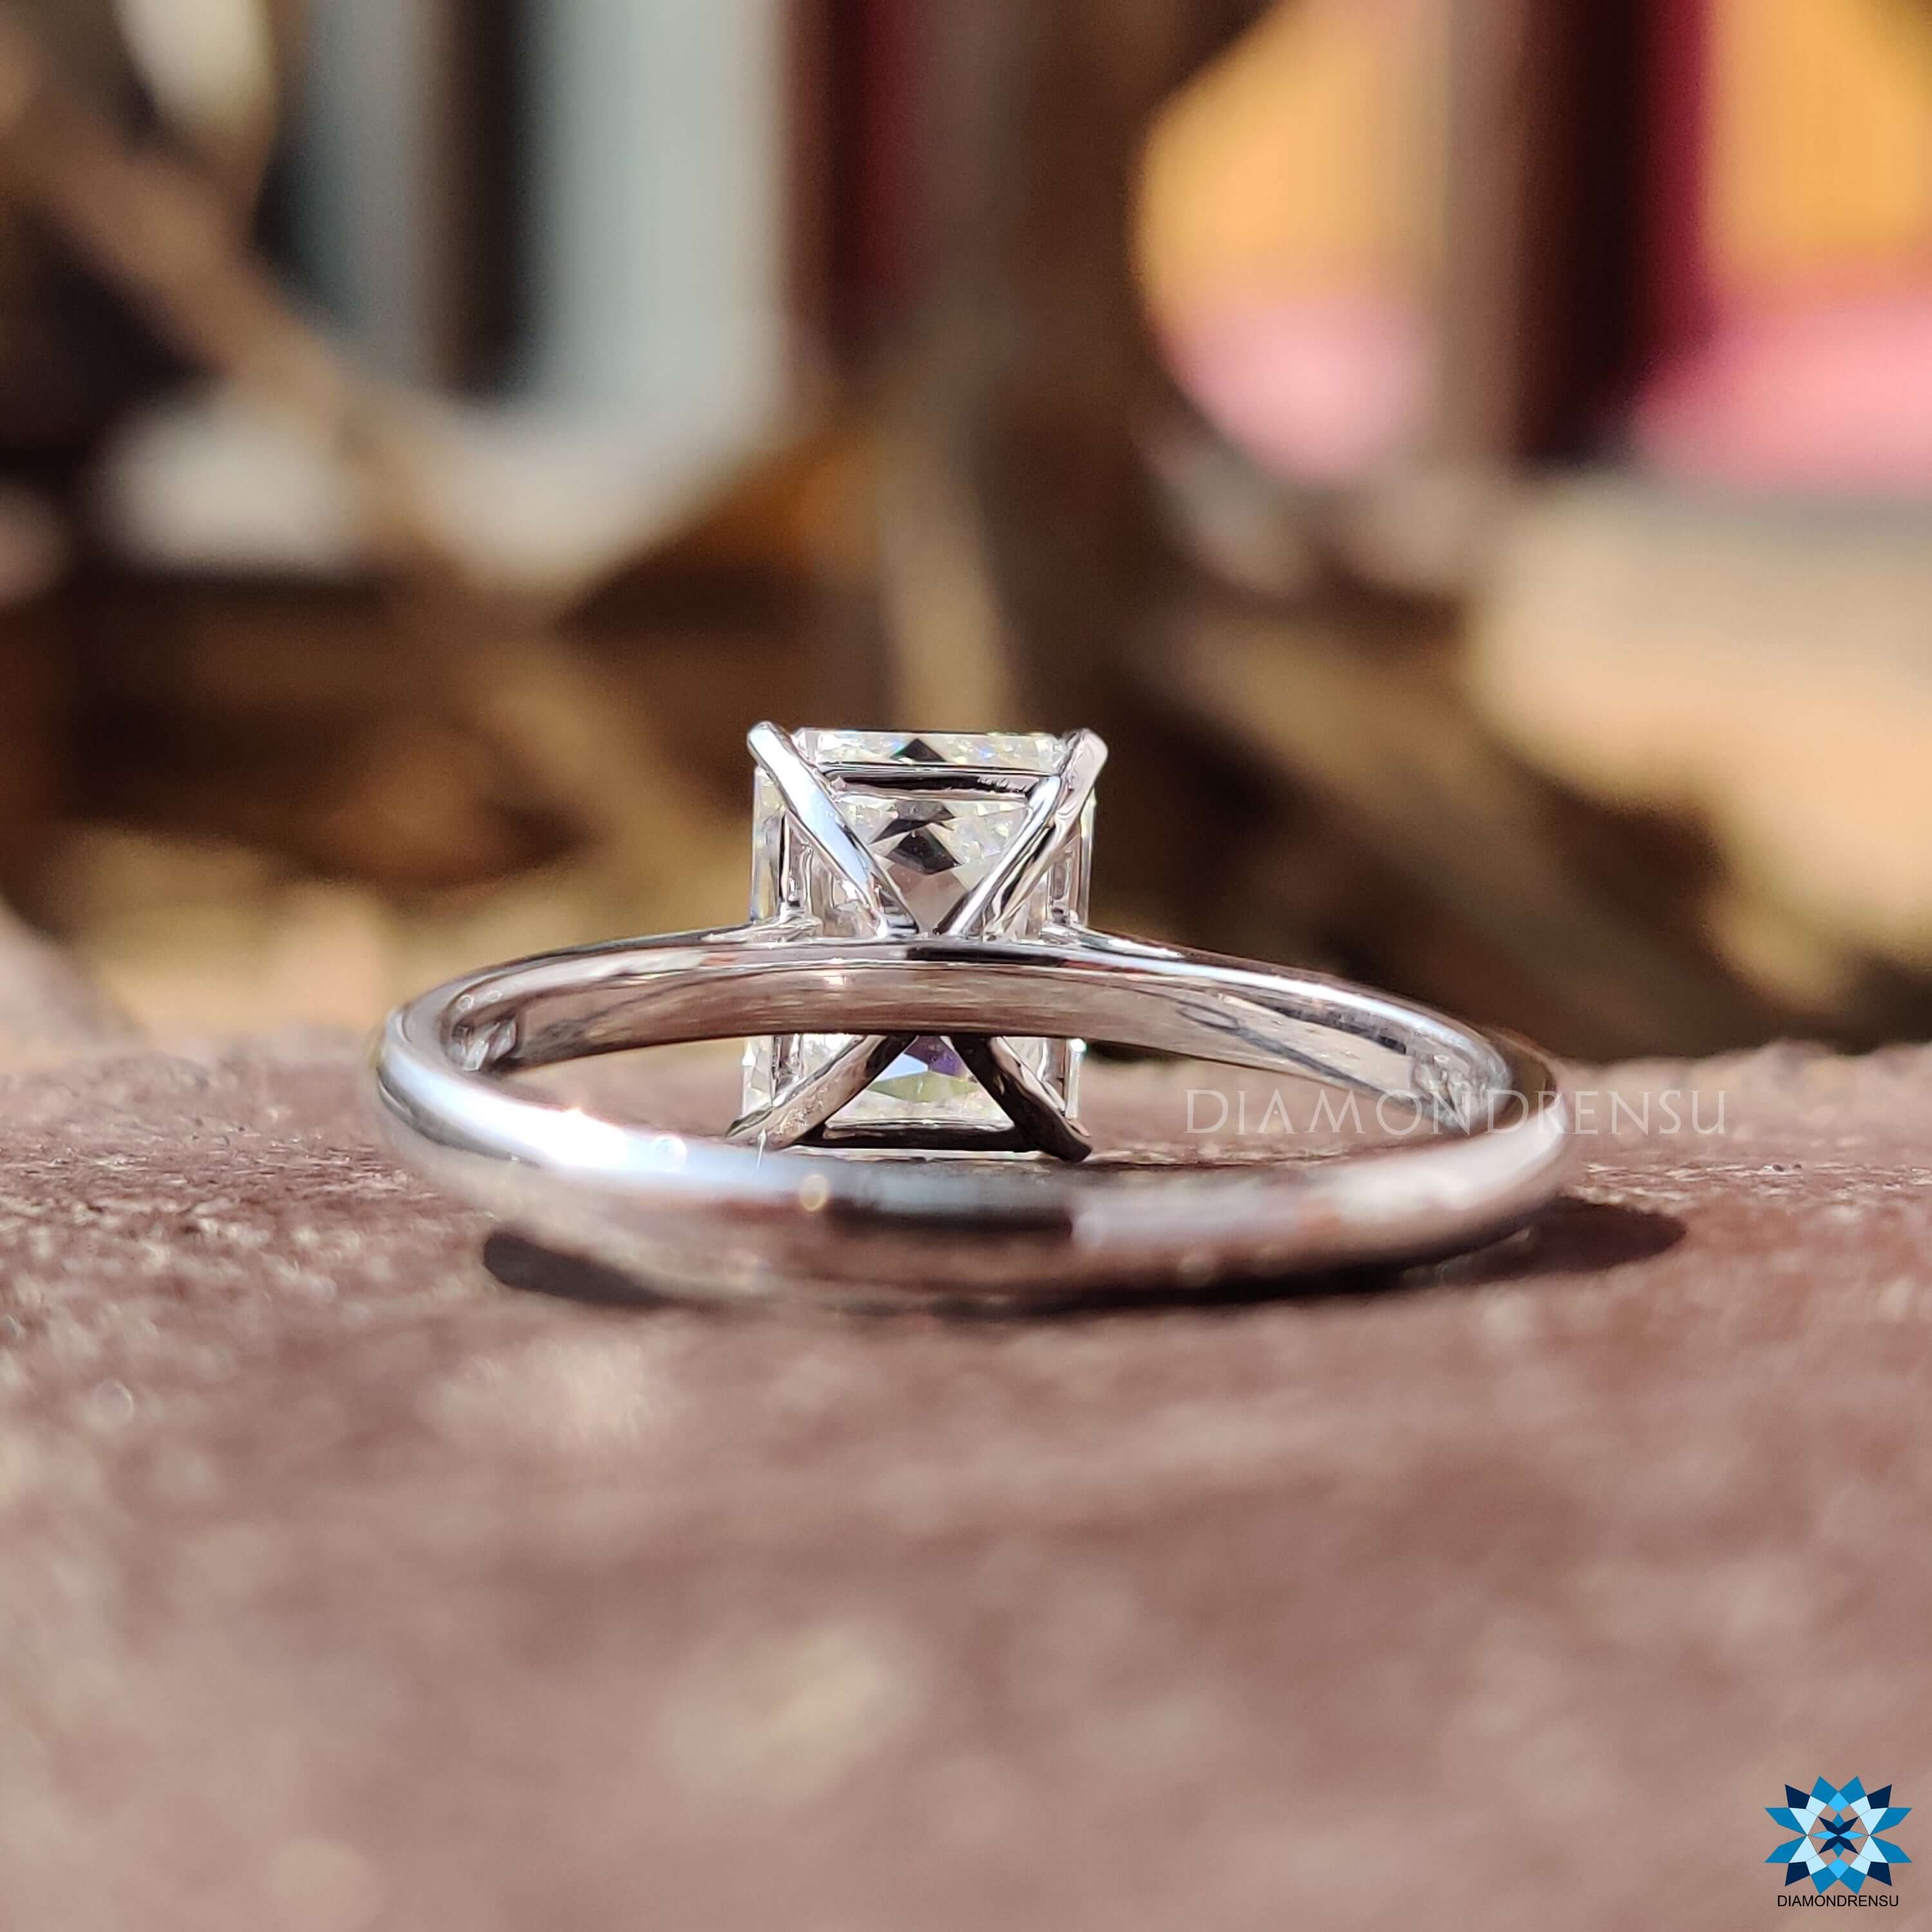 solitaire moissanite engagement ring - diamondrensu